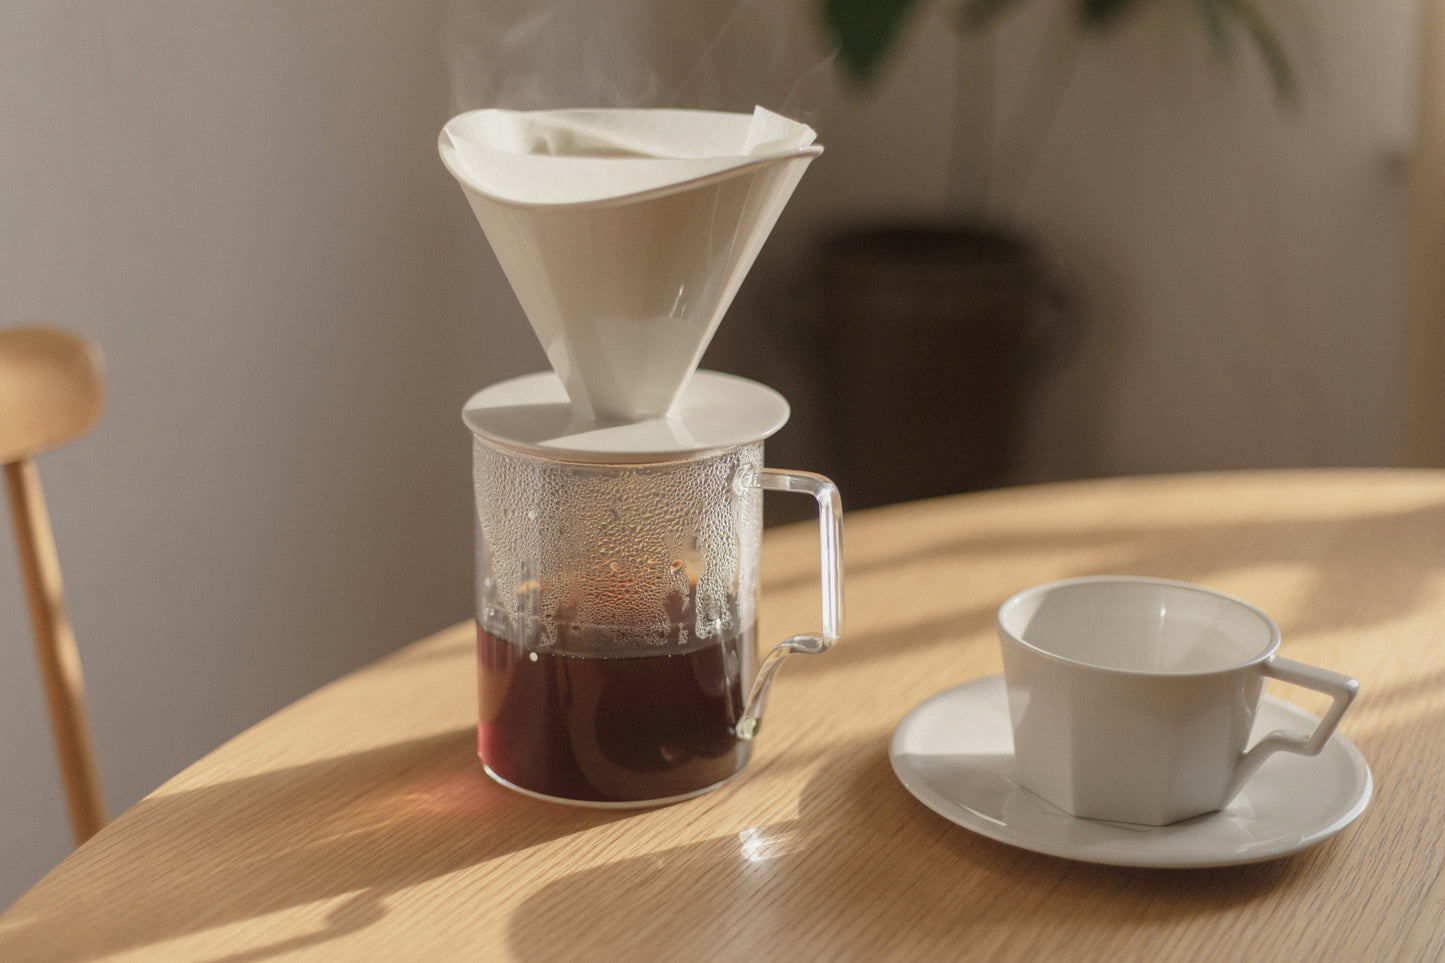 OCT Coffee jug 600 ml